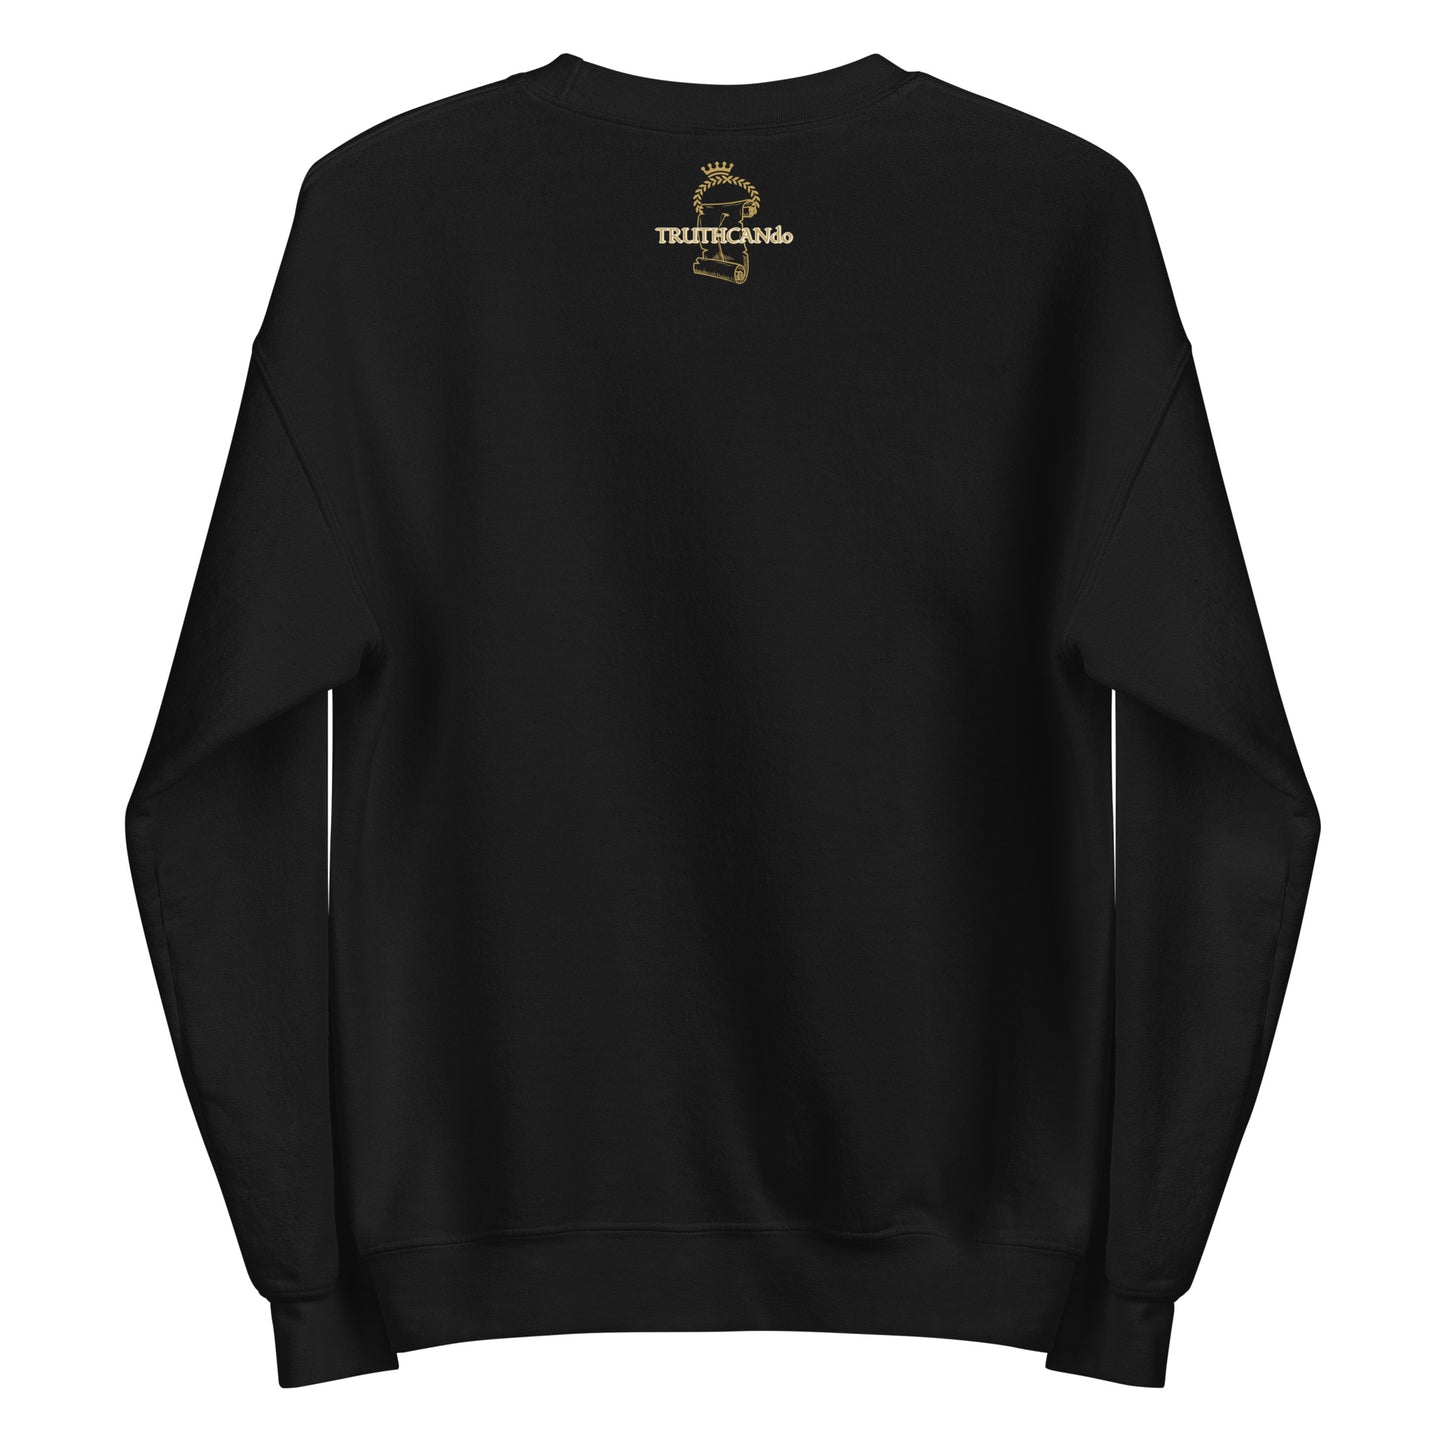 NC Renaissance - Unisex Sweatshirt